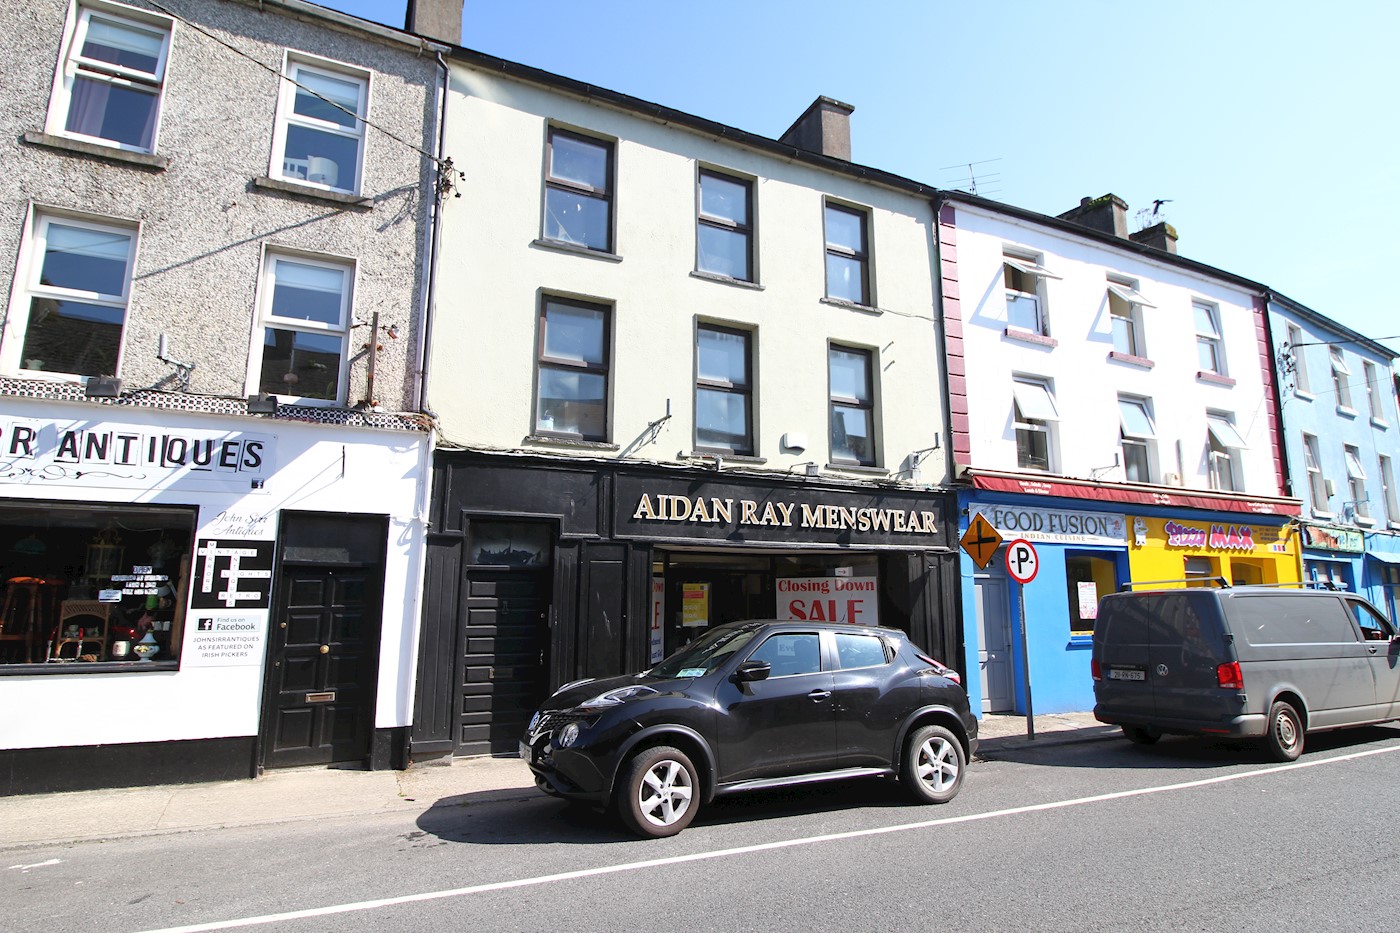 Property known as Aidan Rays Menswear, Patrick Street, Boyle, Co. Roscommon, F52 KR04 1/2